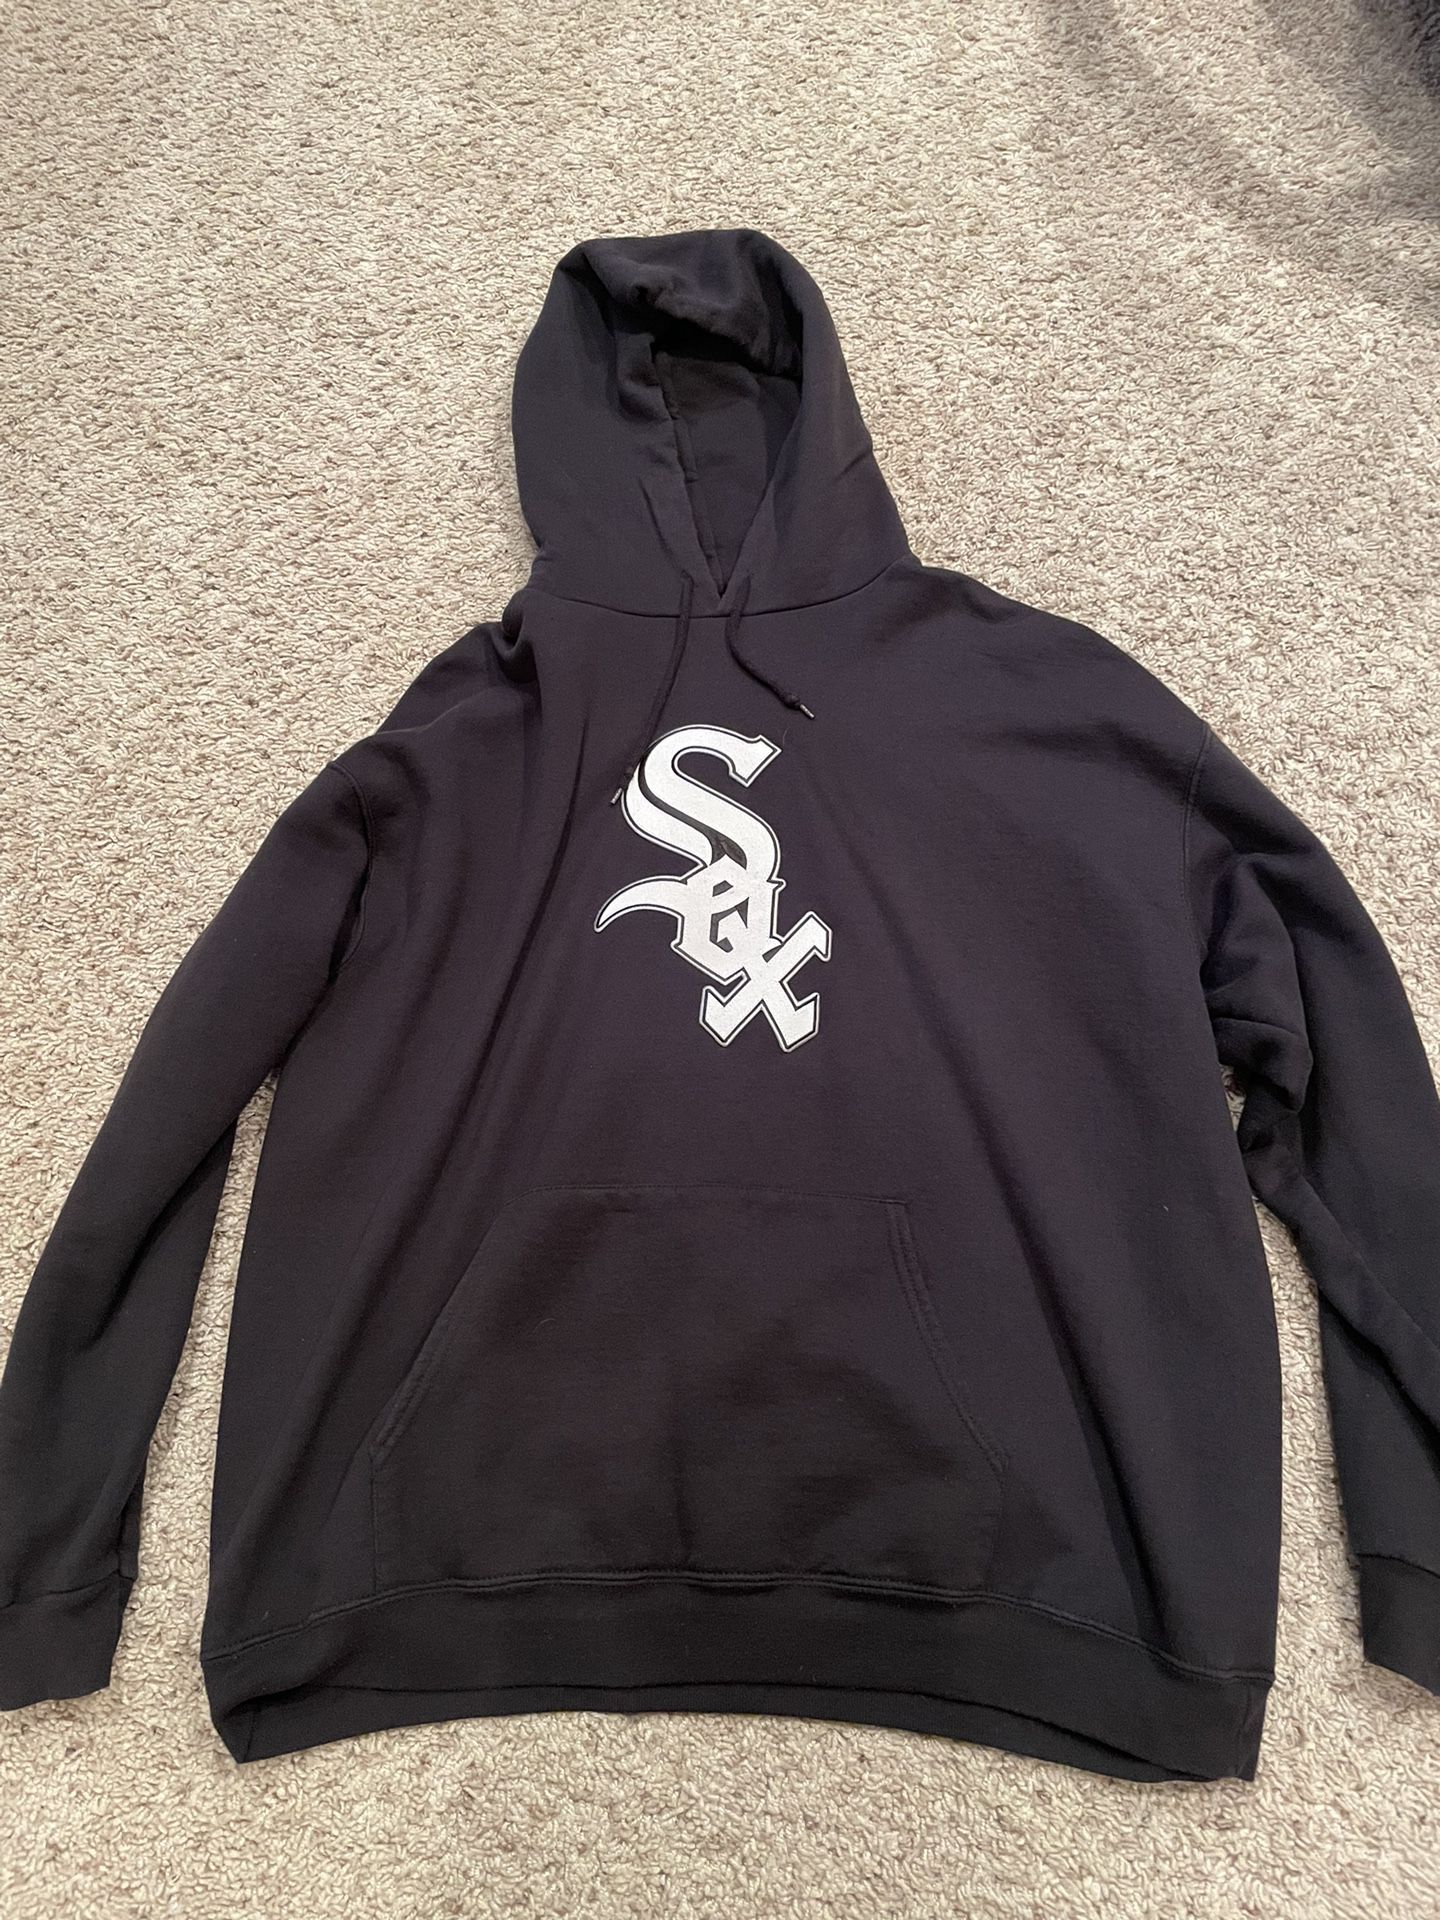 White Sox Hooded Sweatshirt - XL